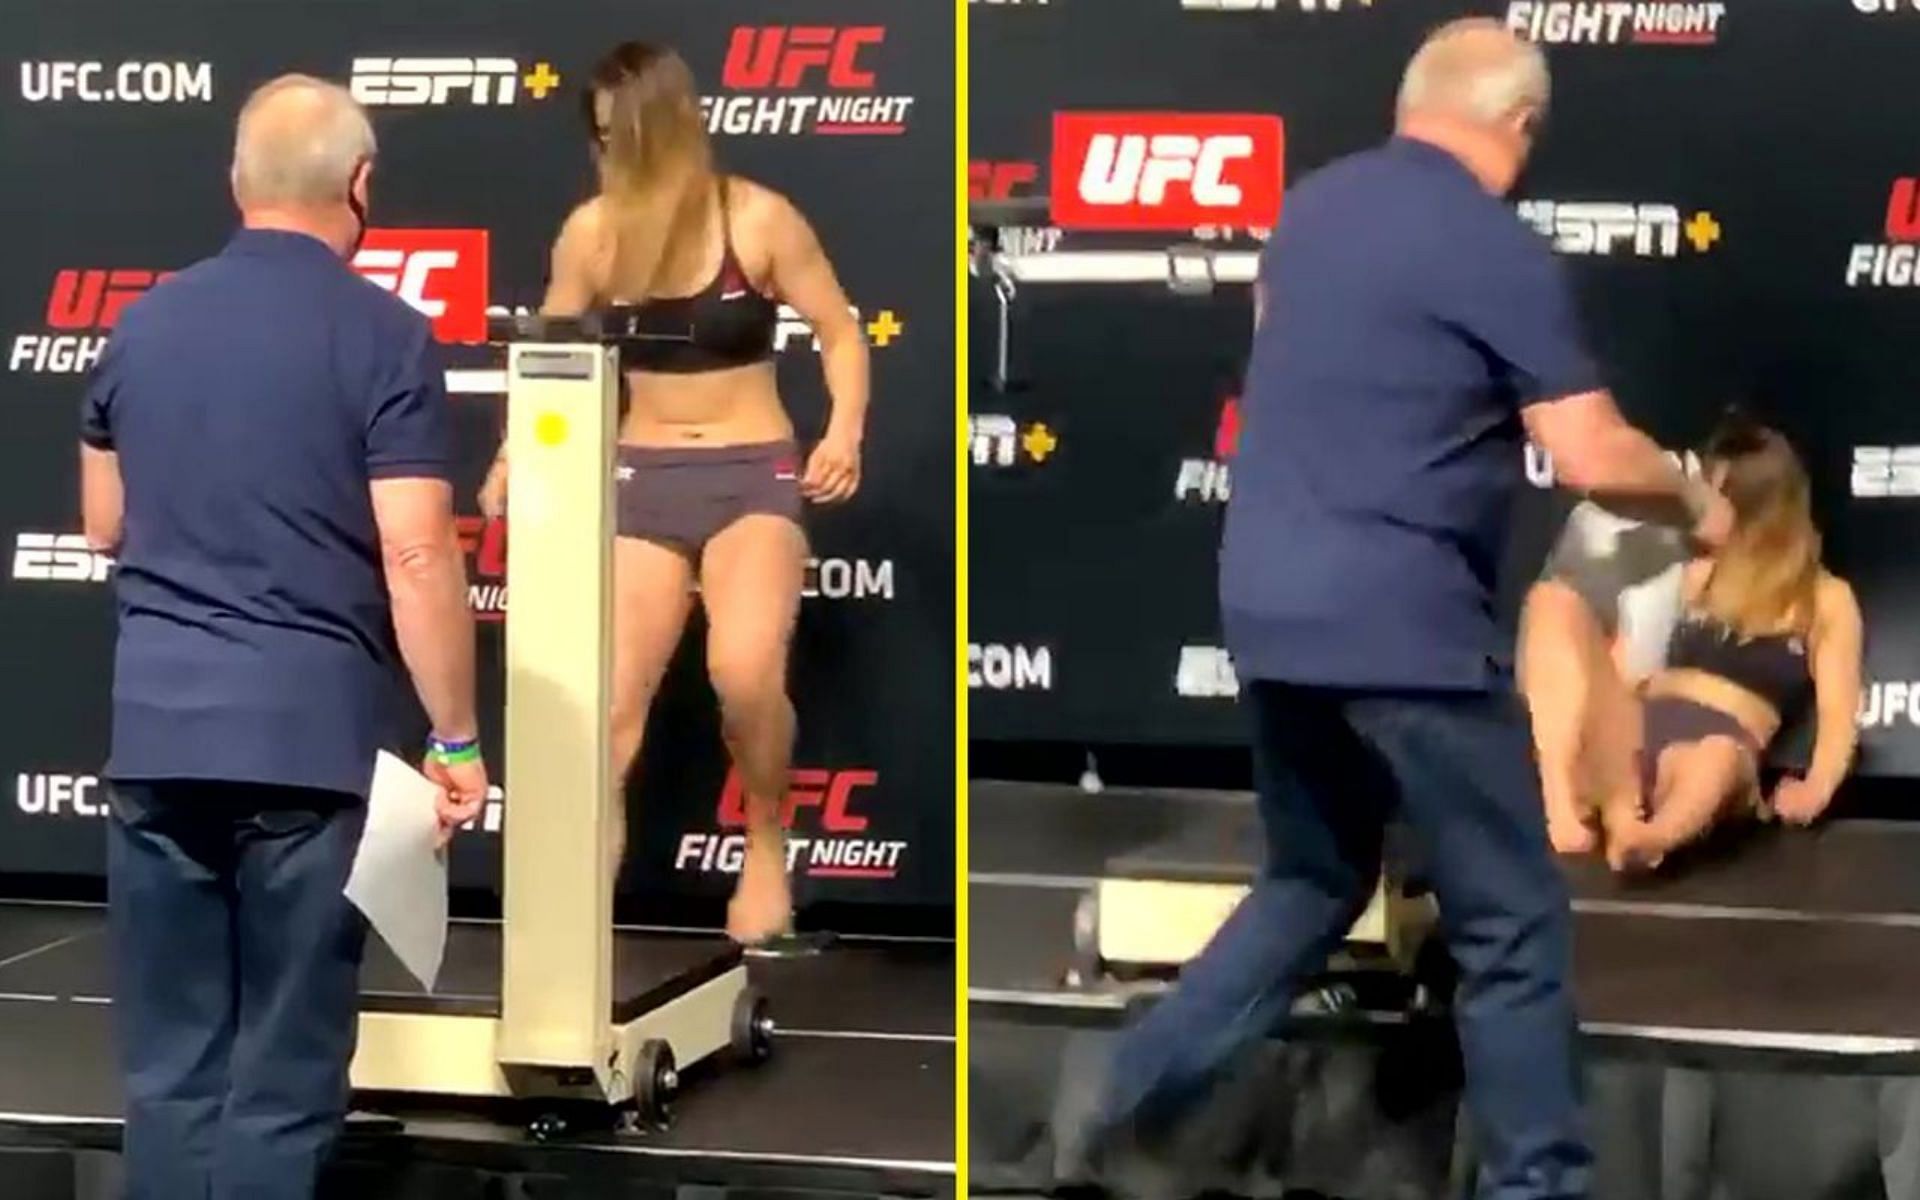 Julija Stoliarenko faints on the scale [Image Credit: UFC]